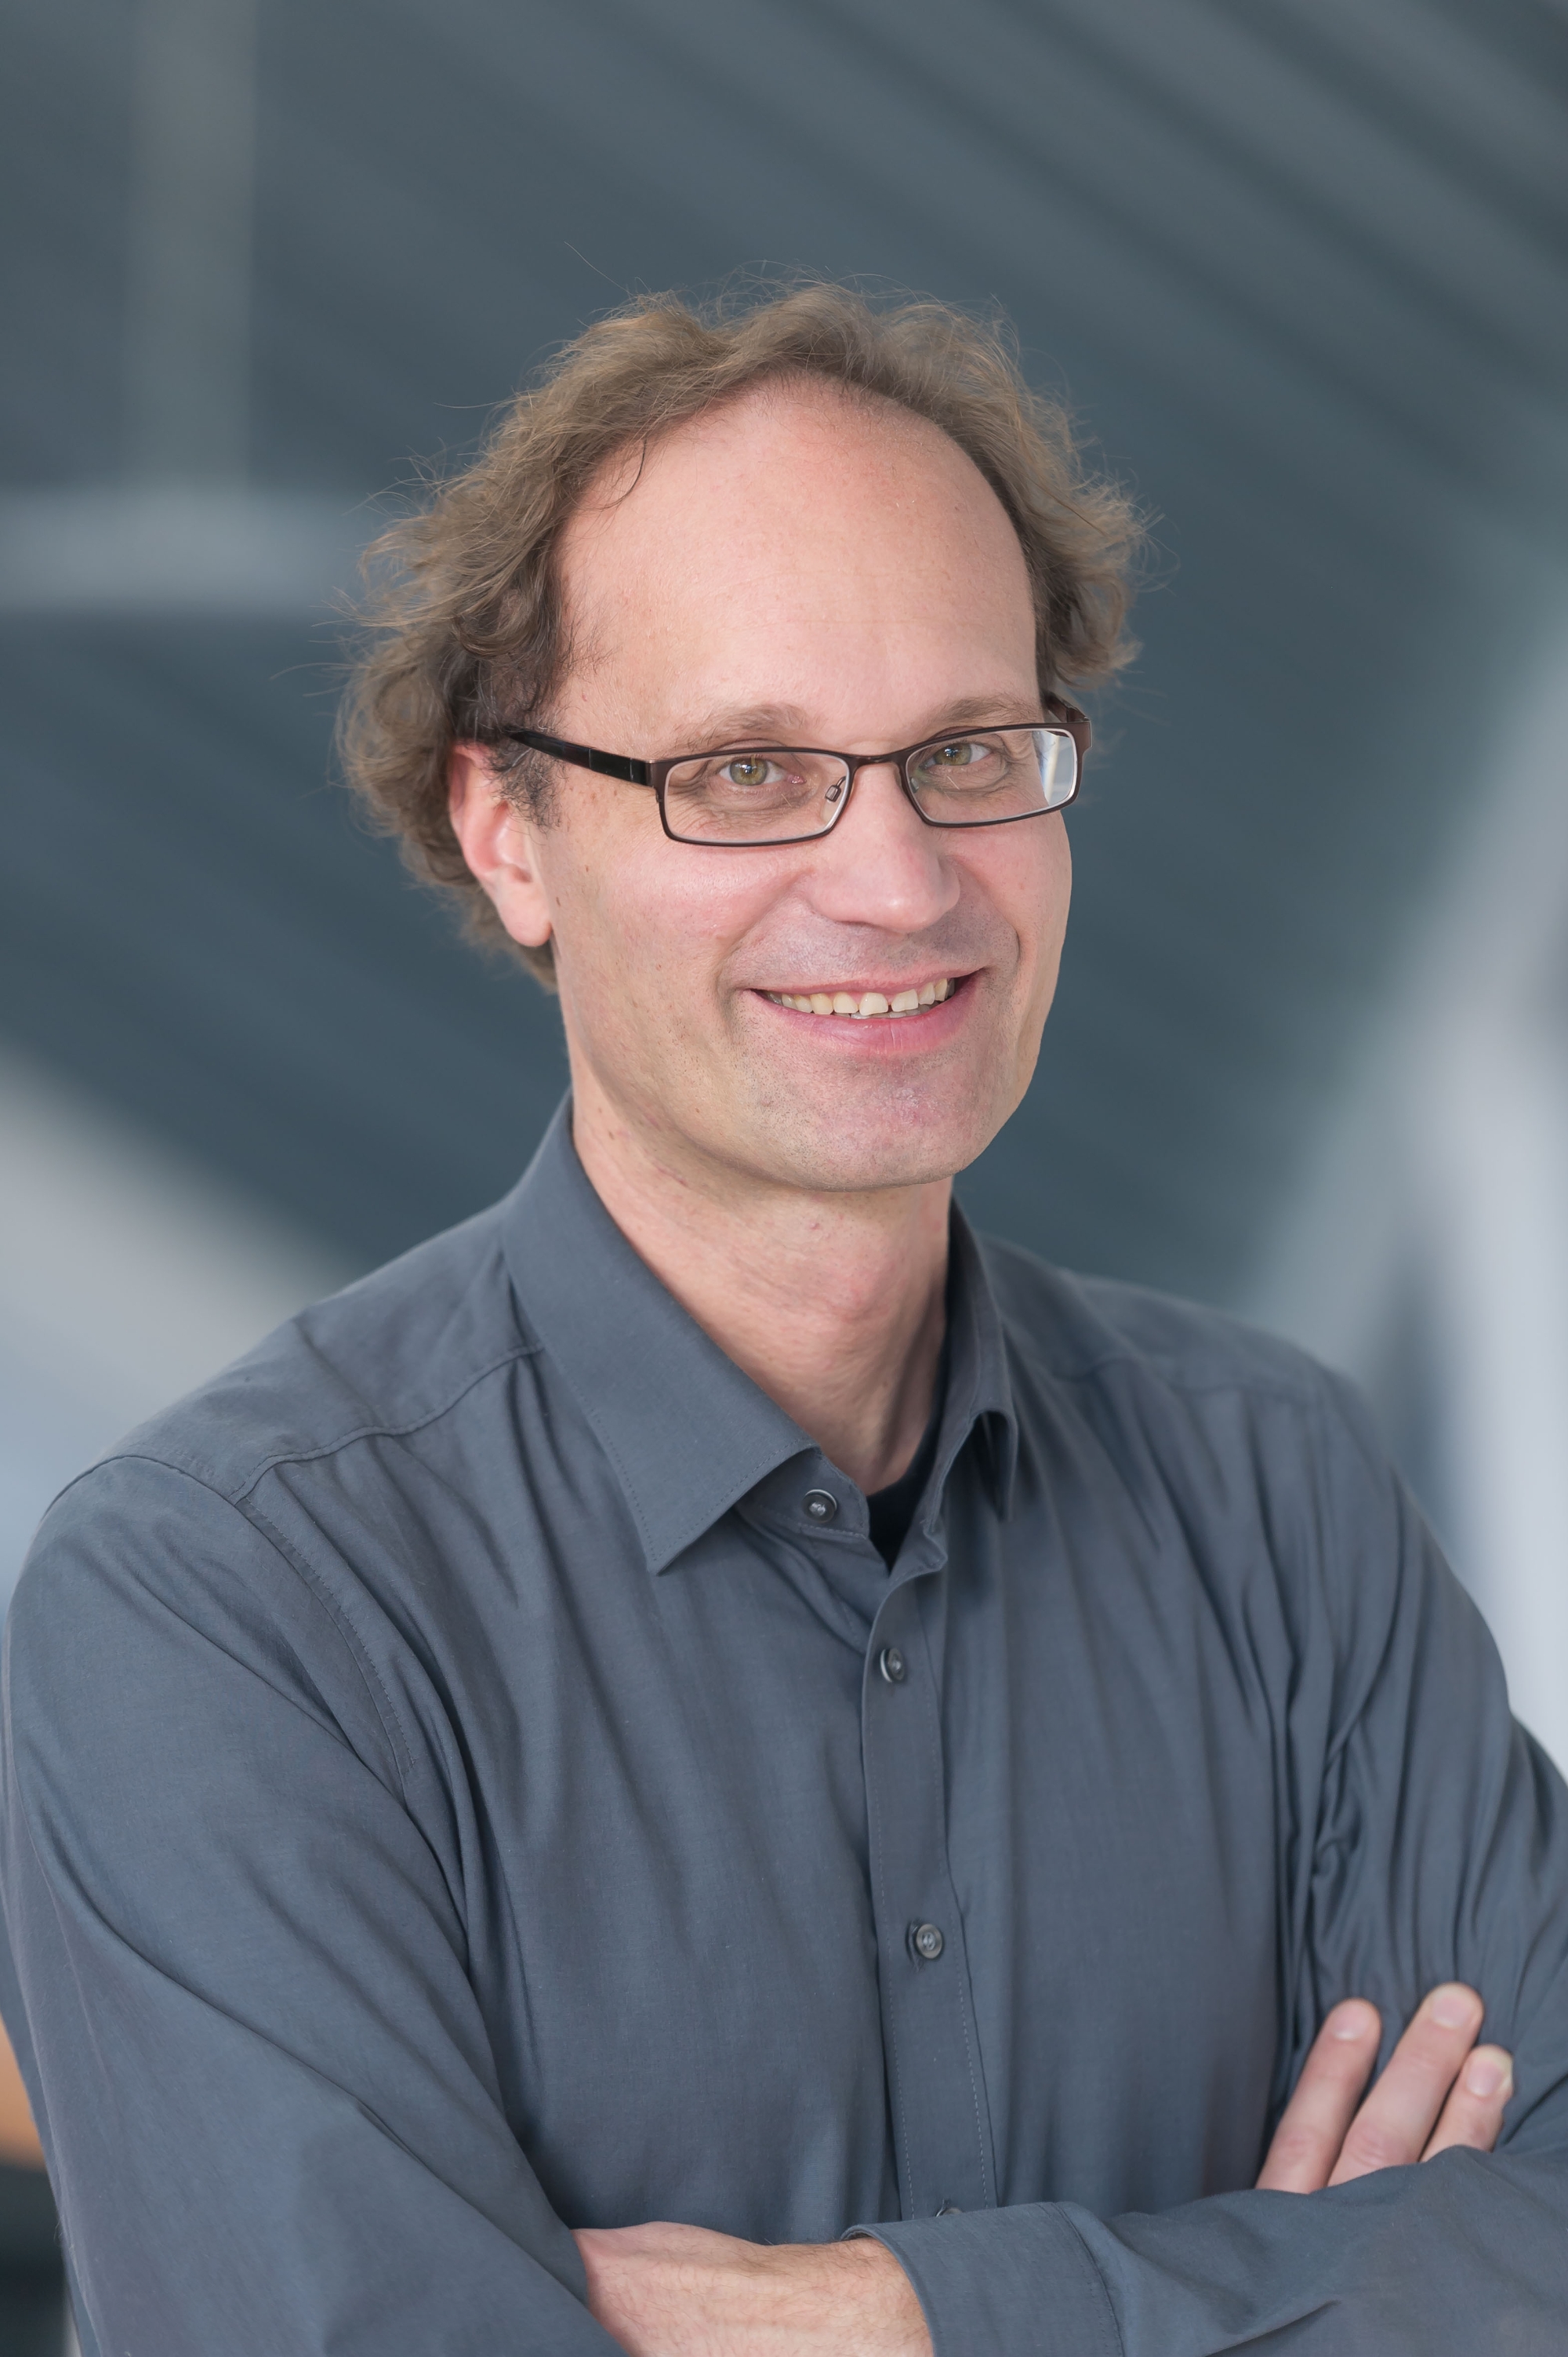 This image shows Prof. Dr. Daniel Weiskopf